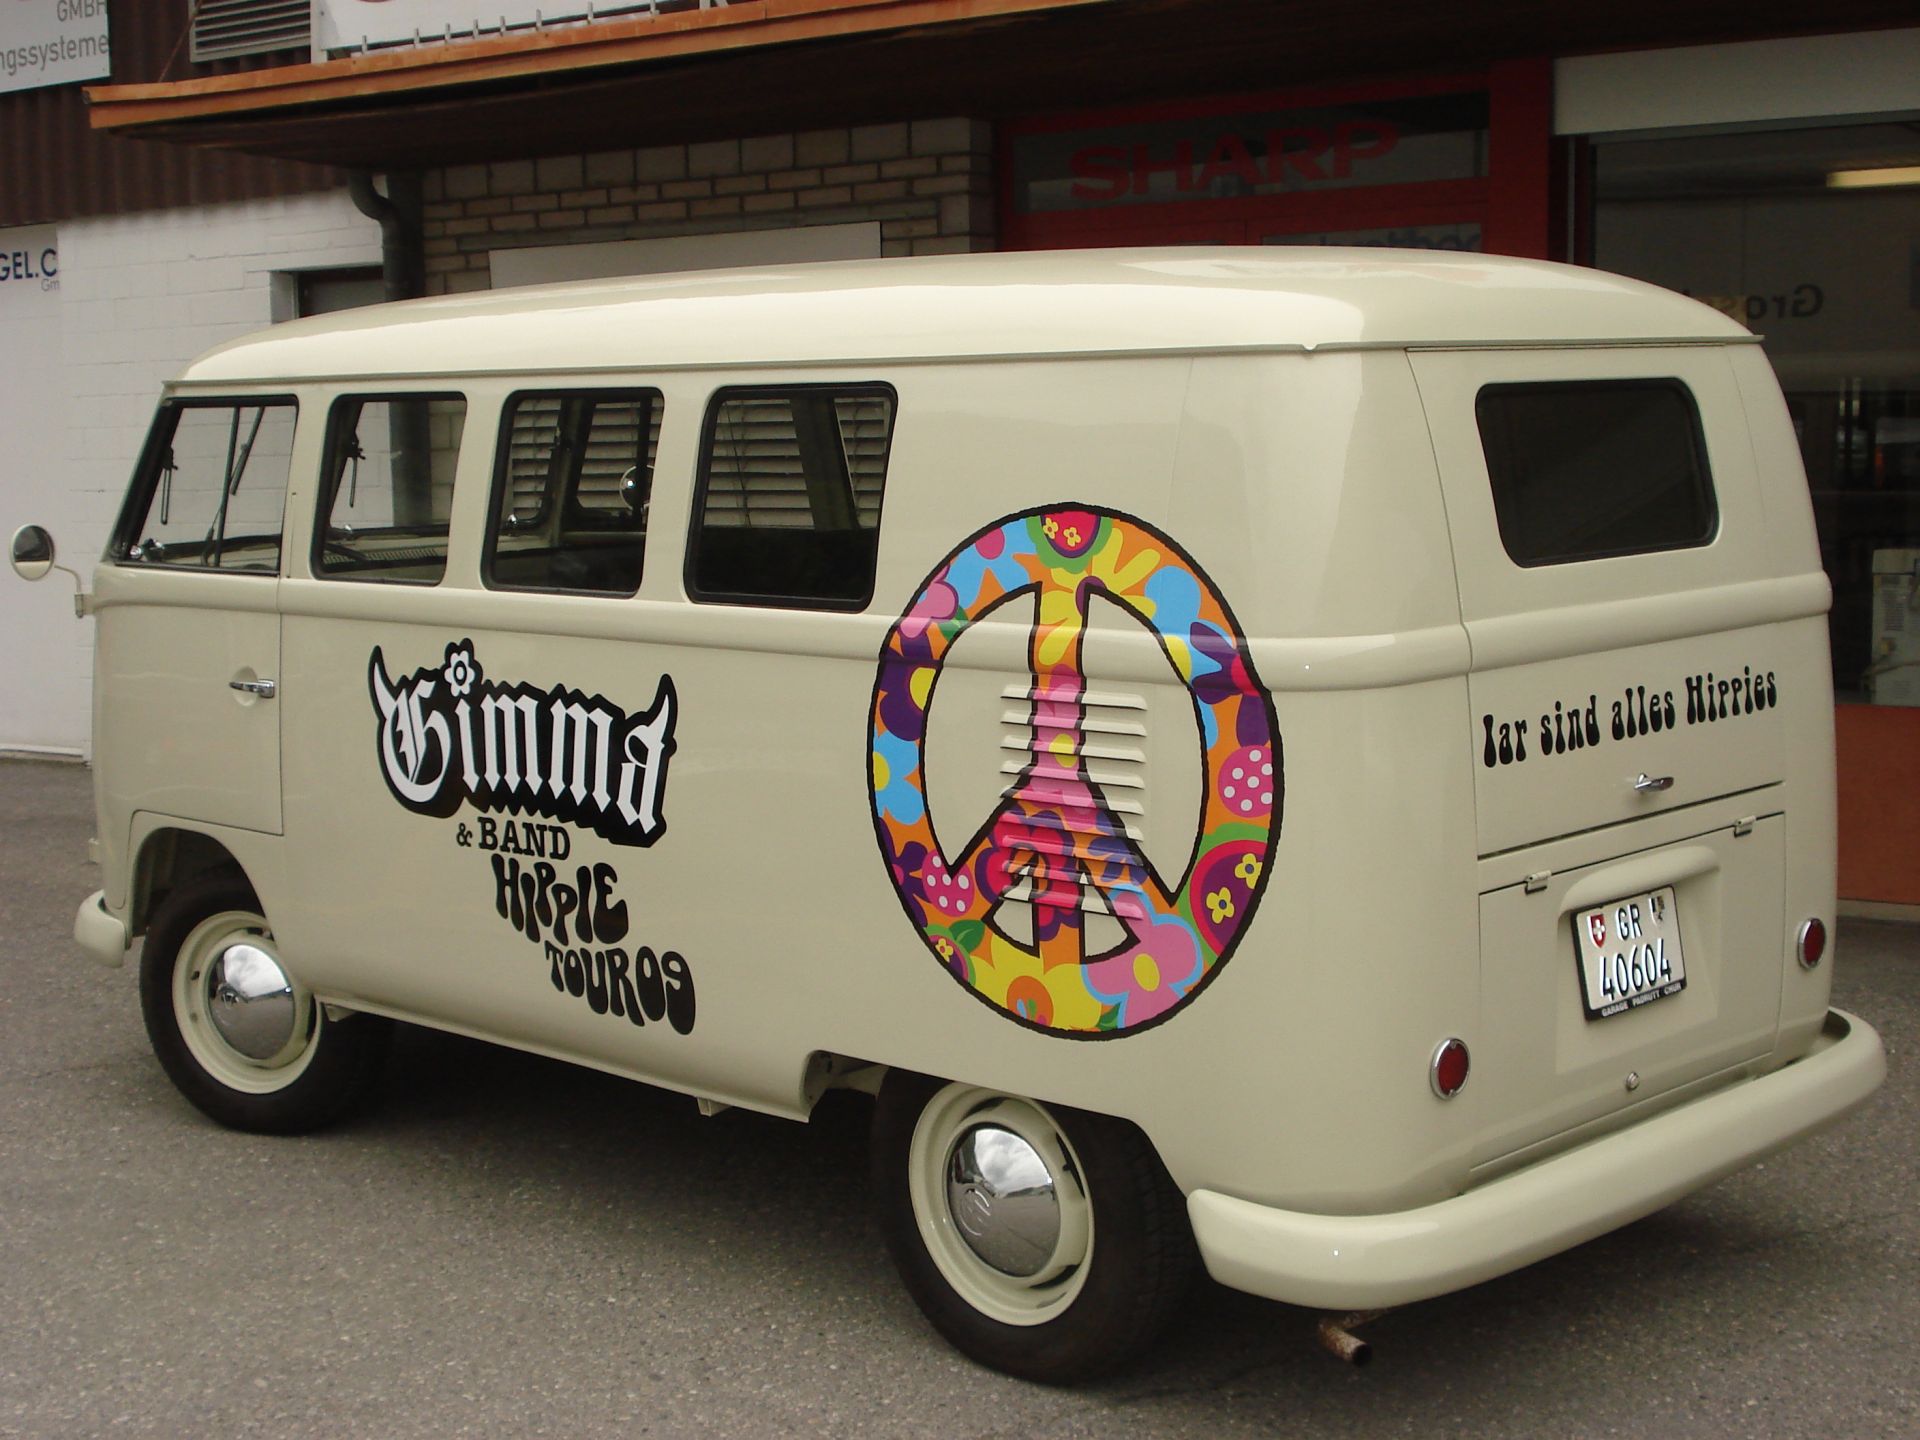 Gimma & Band<br>Hippie Touros<br>Mai 2009